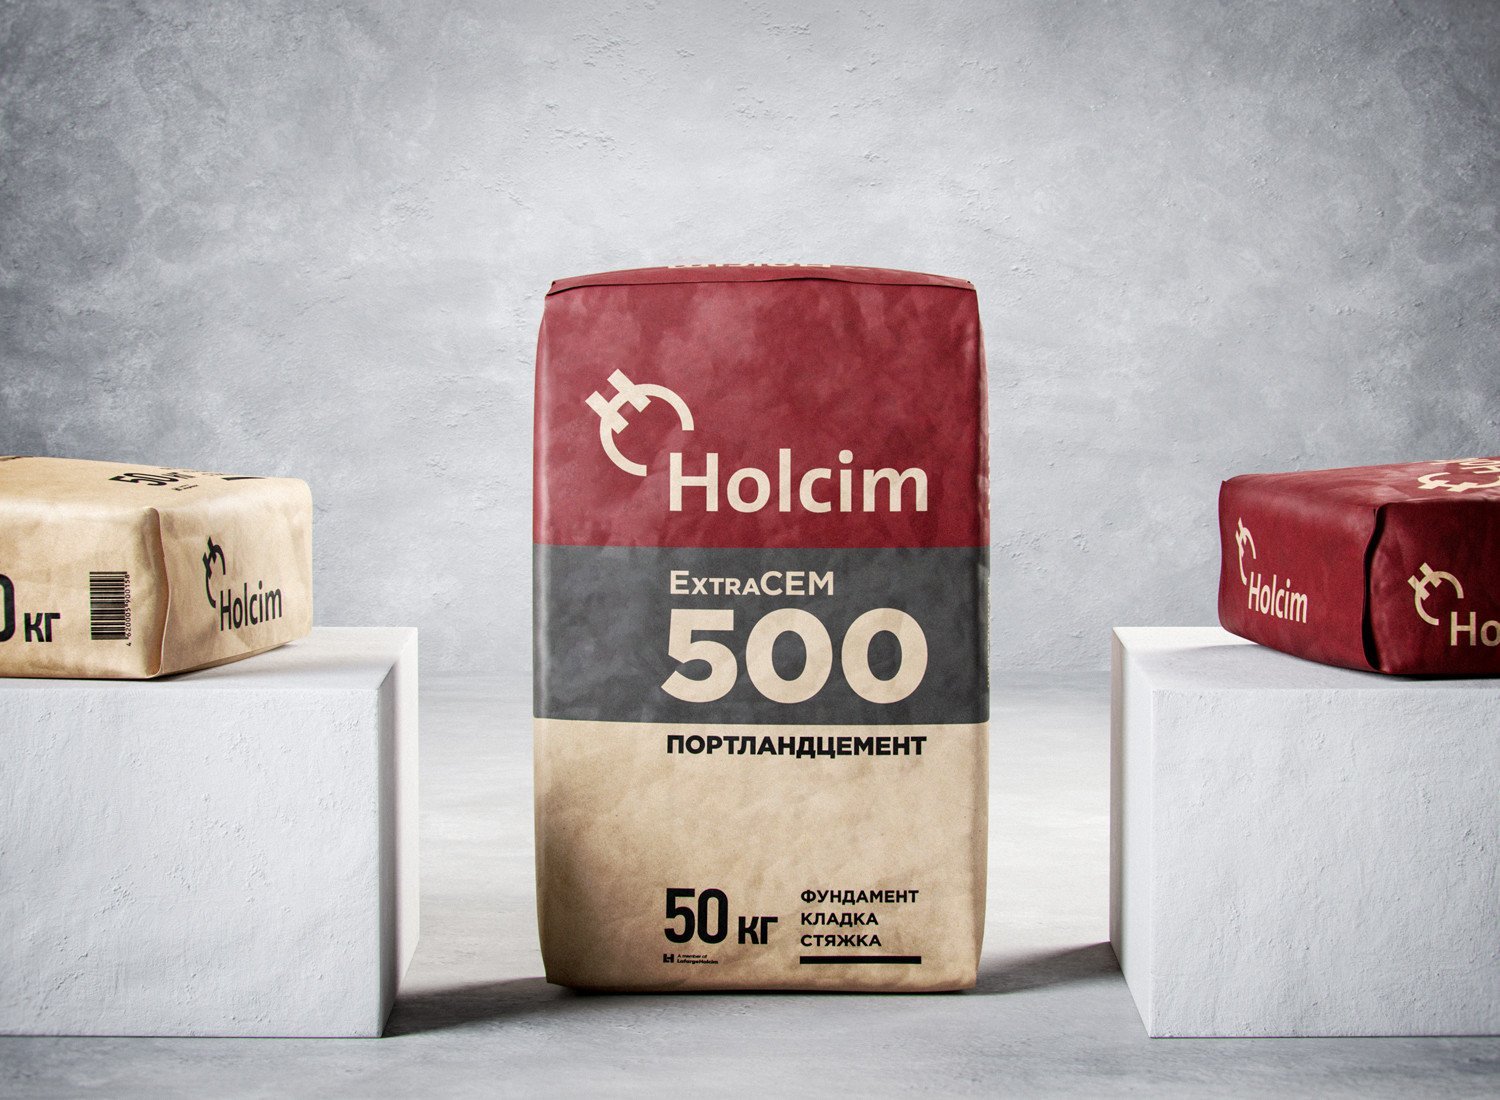 50 кг 500 г. Цемент Холсим м500 40кг. Цемент м500 д20 Холсим 40 кг. Holcim цемент 500 40 кг. Цемент Holcim м500 40кг (35).